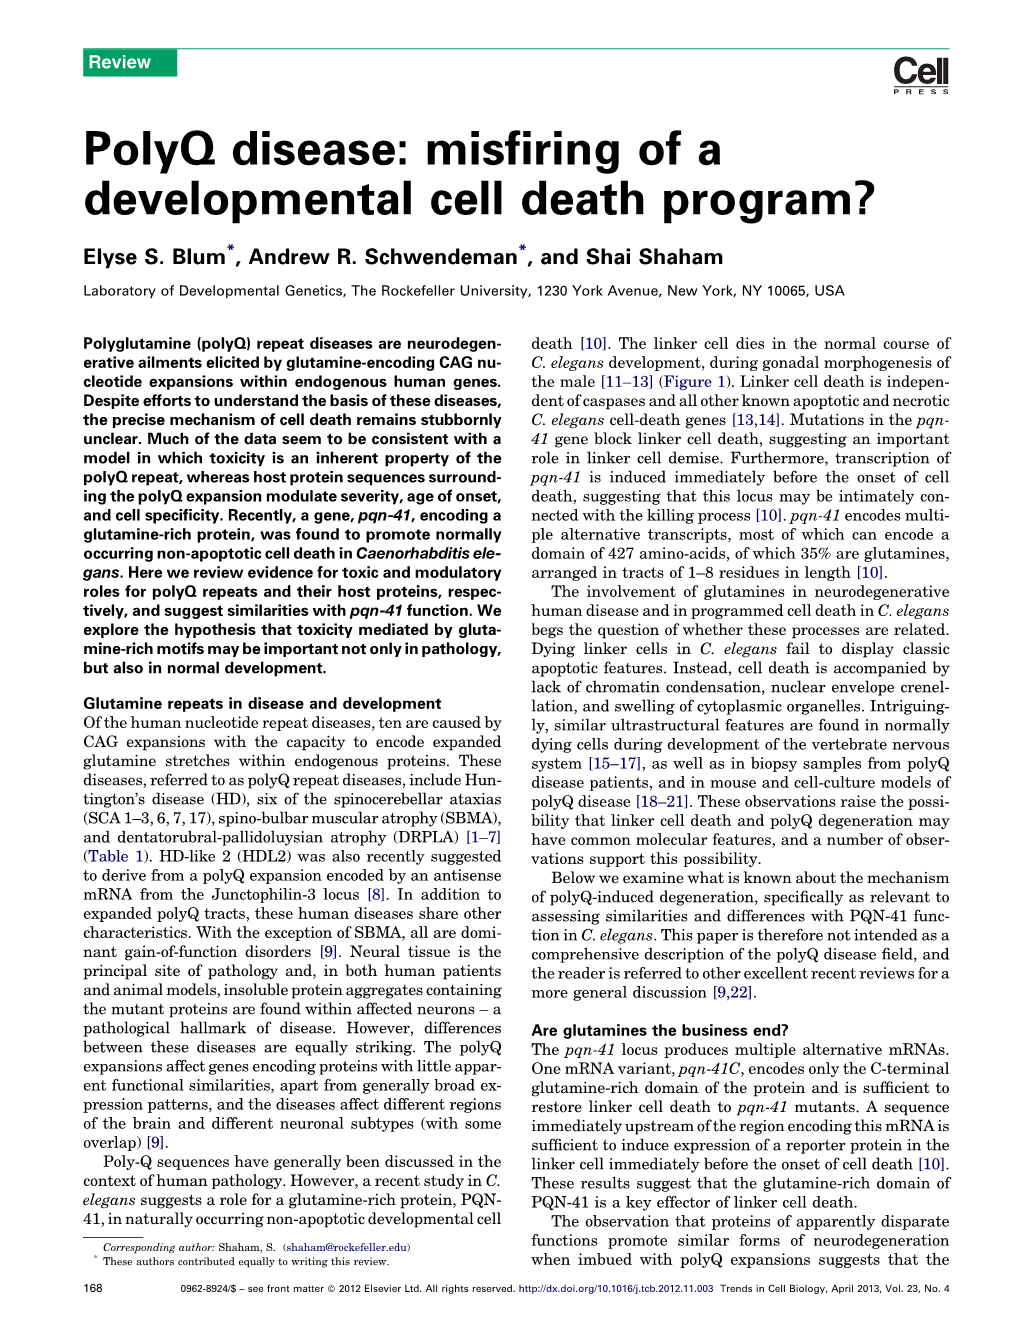 Polyq Disease: Misfiring of a Developmental Cell Death Program?